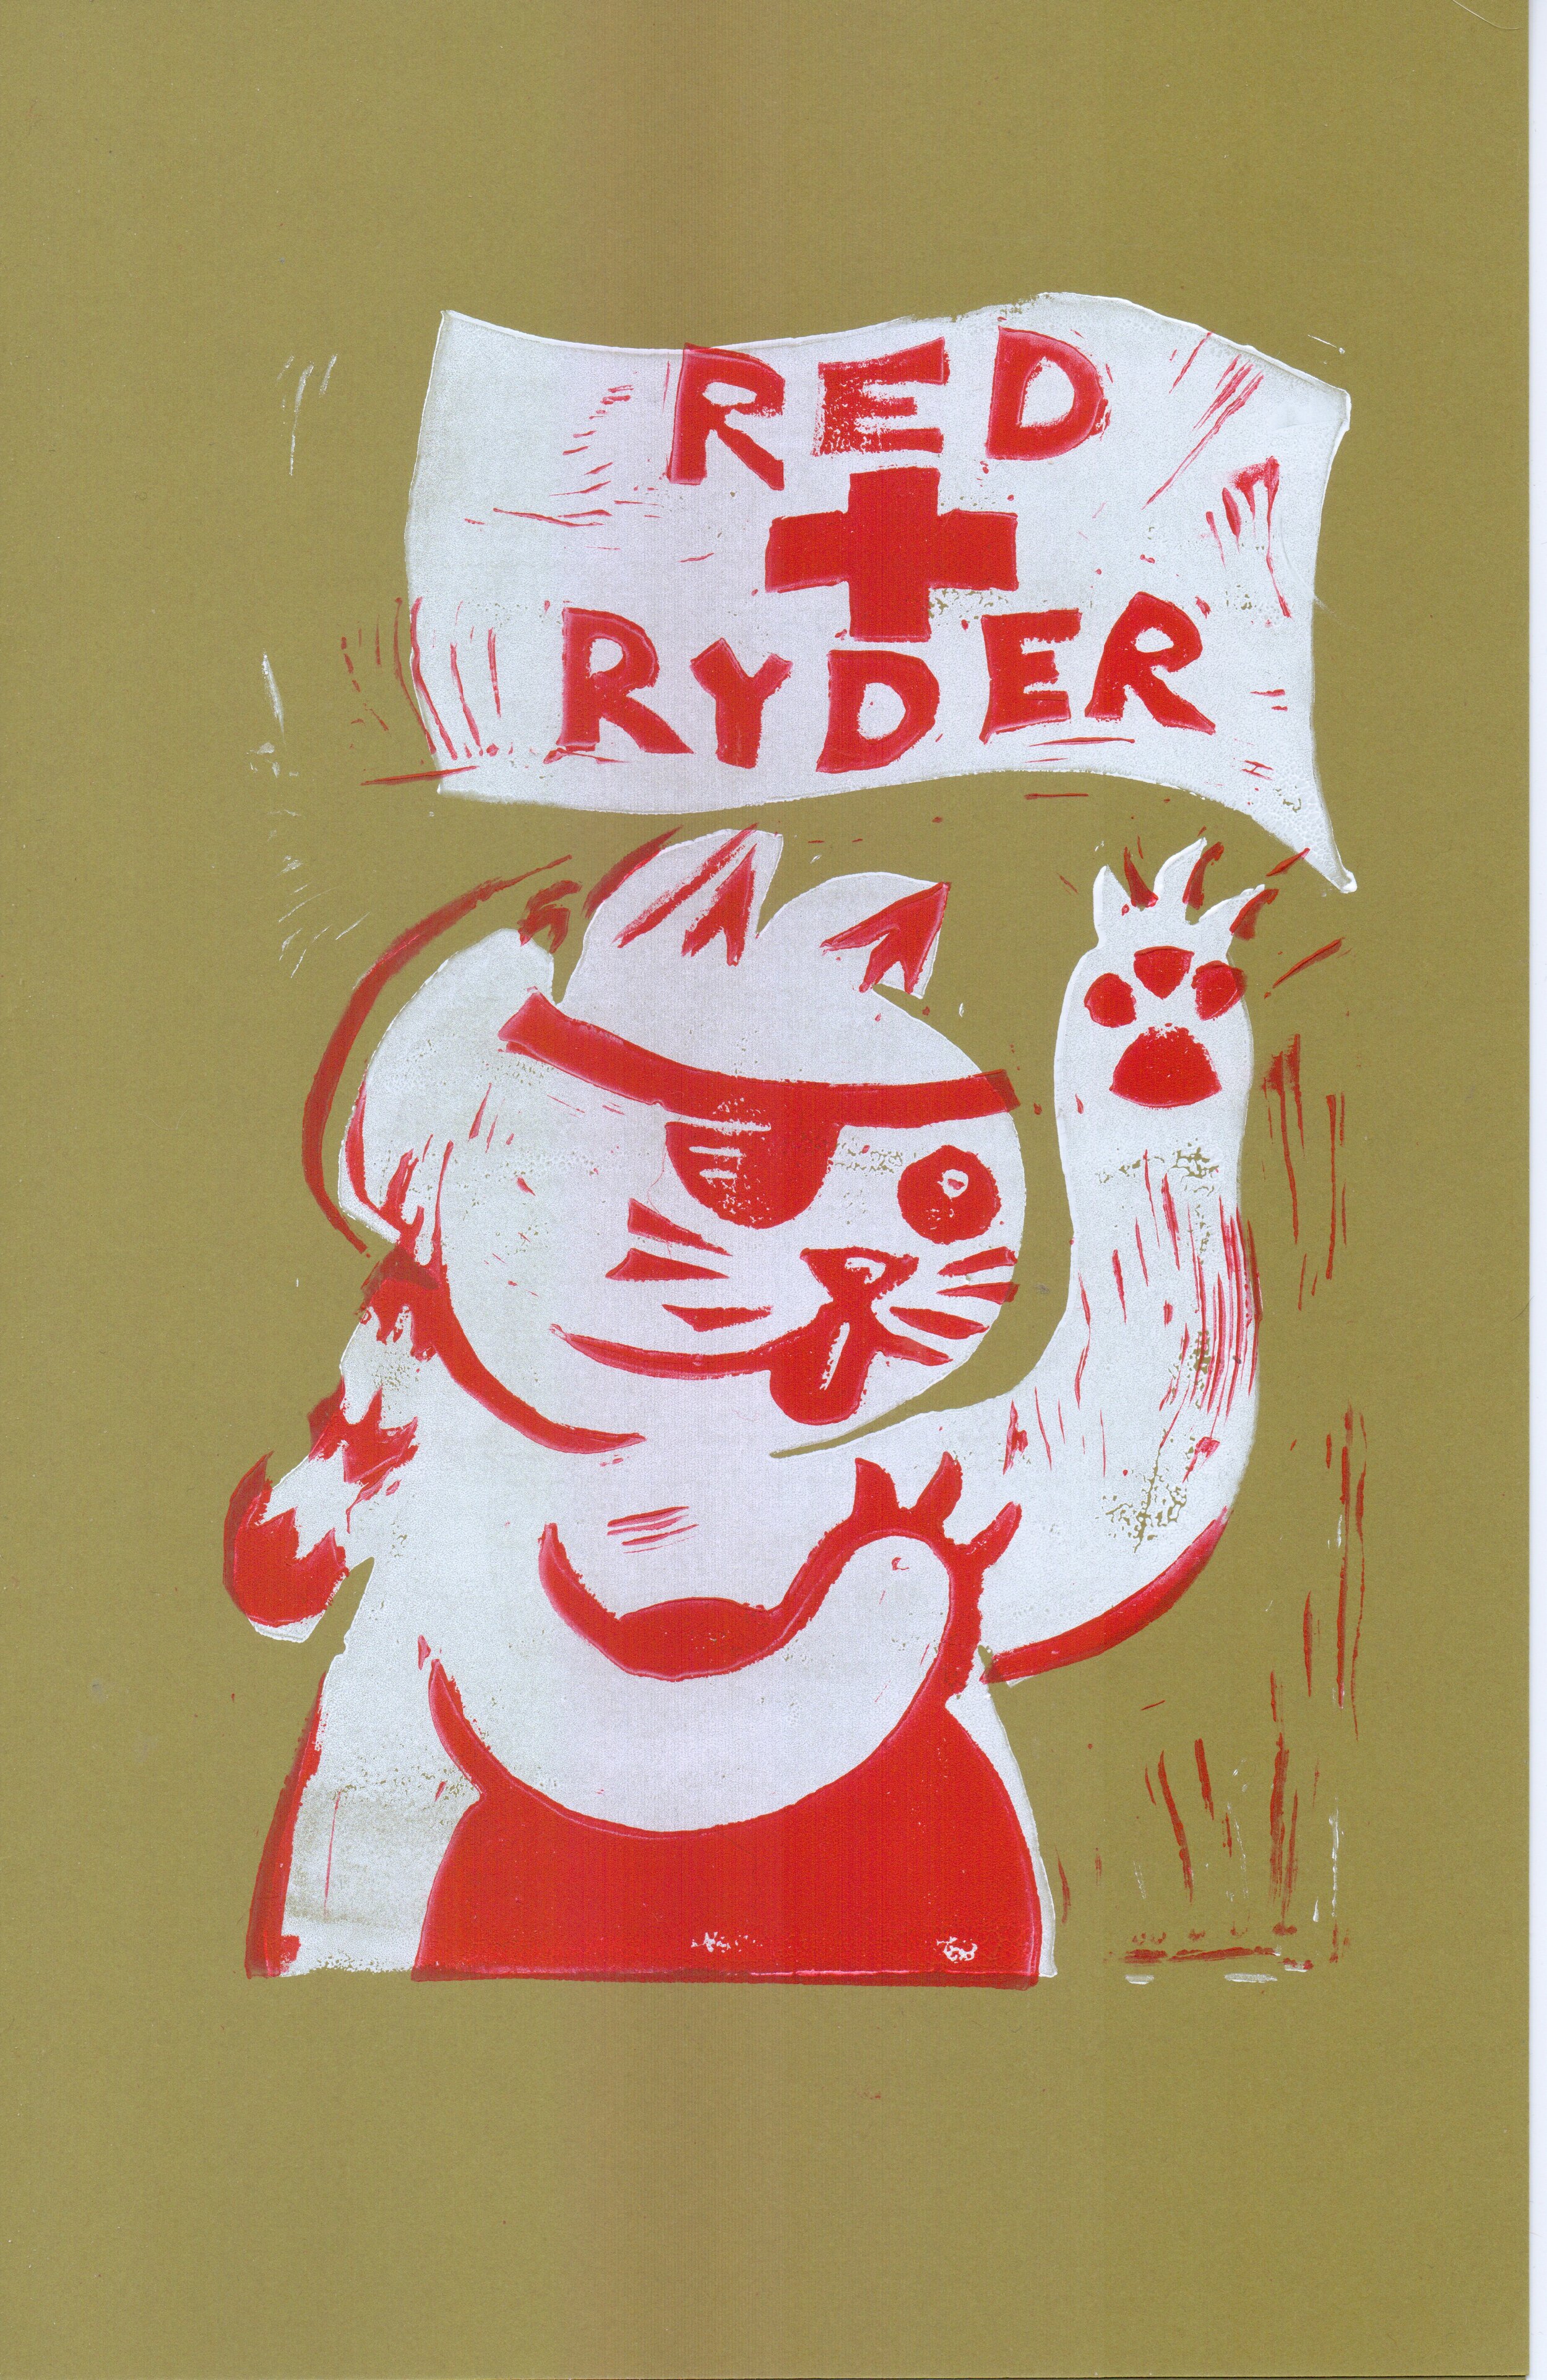 RED RYDER CARD.jpeg